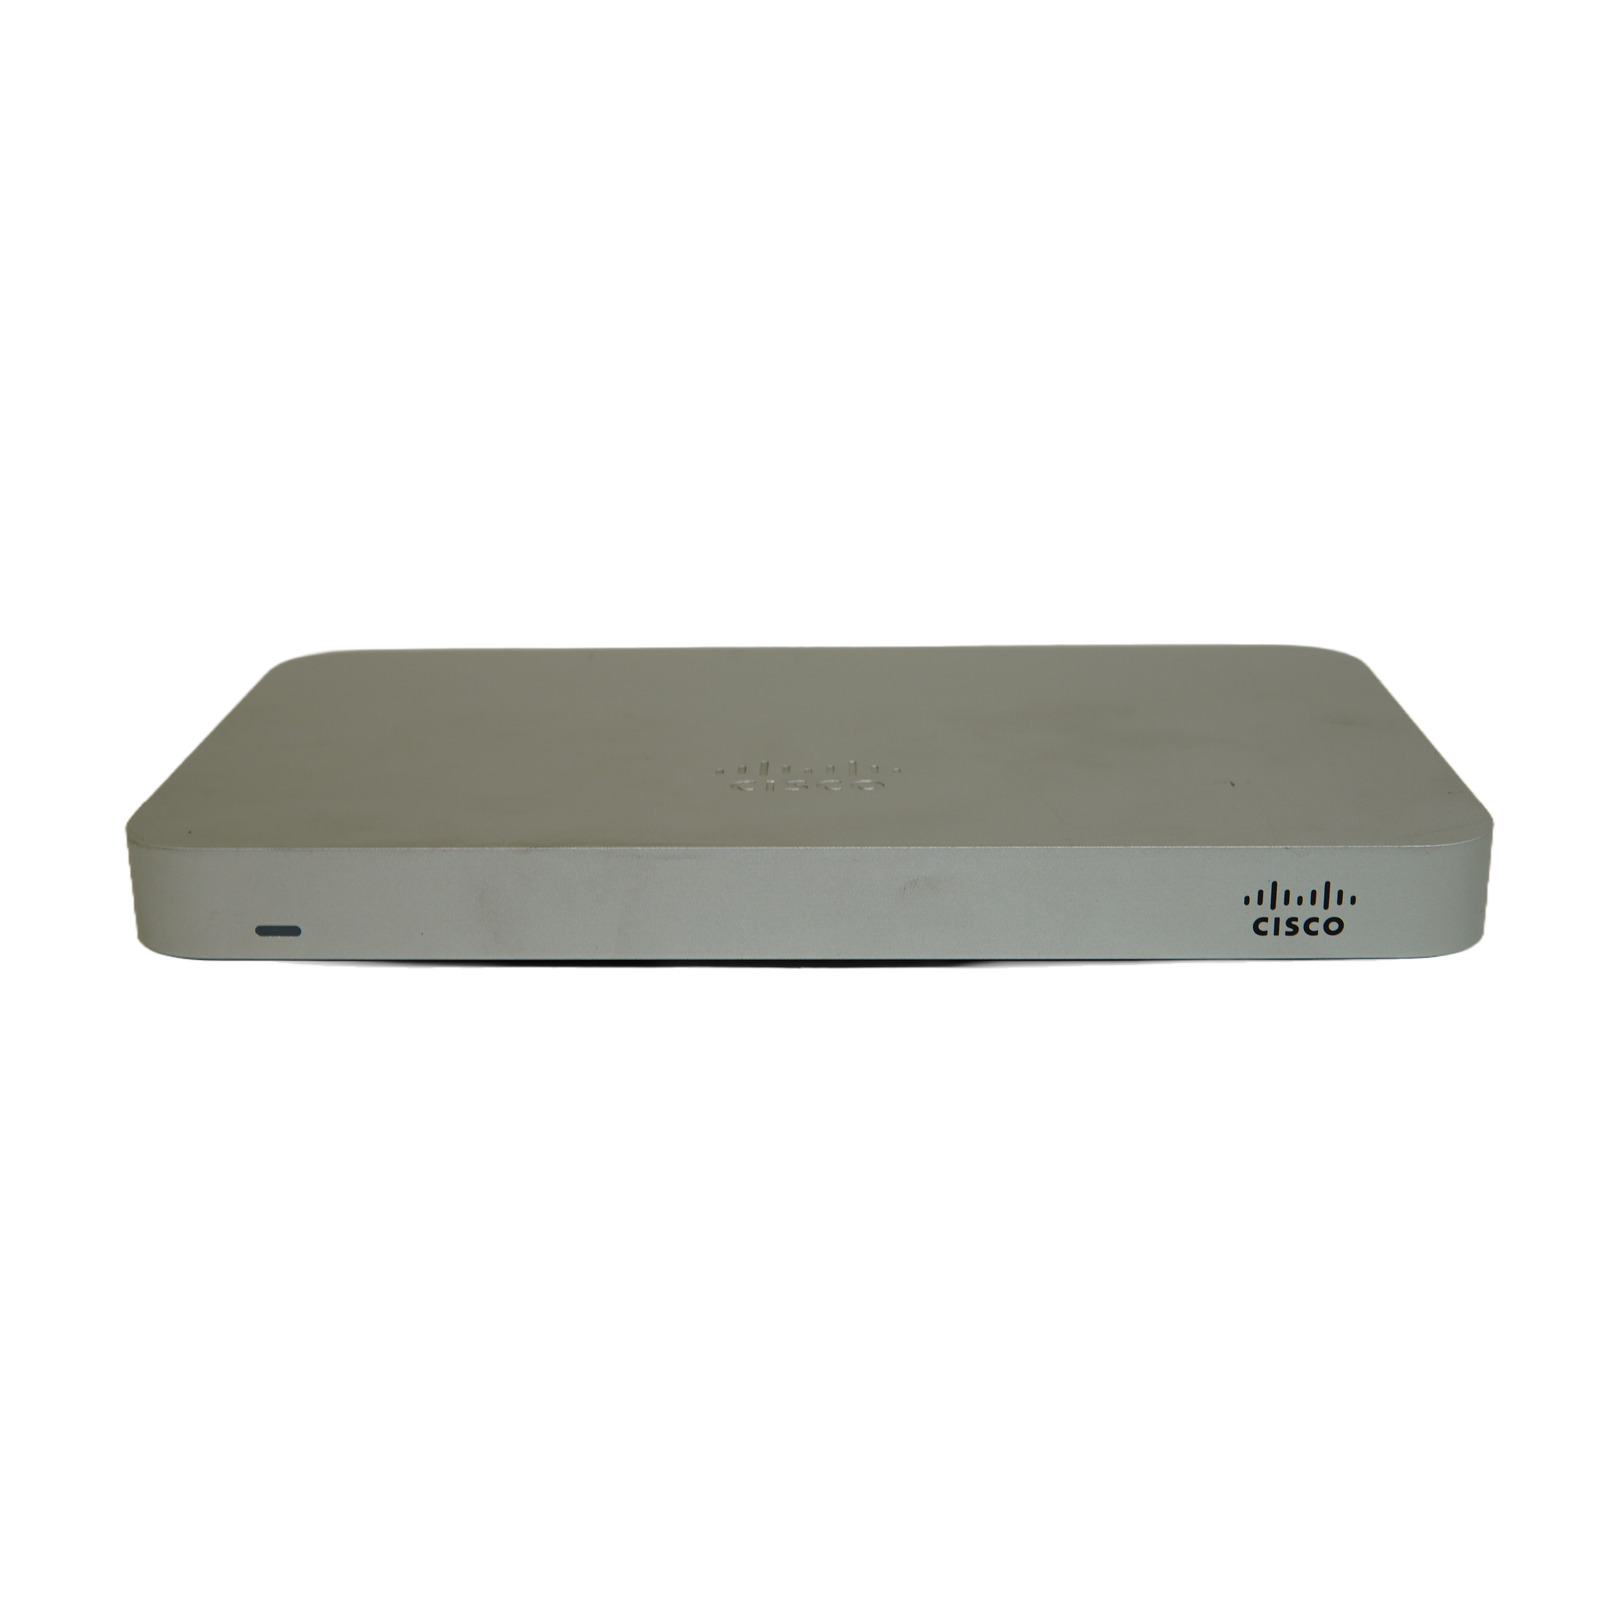 Cisco Meraki MX64 Cloud Managed Security Appliance - UNCLAIMED